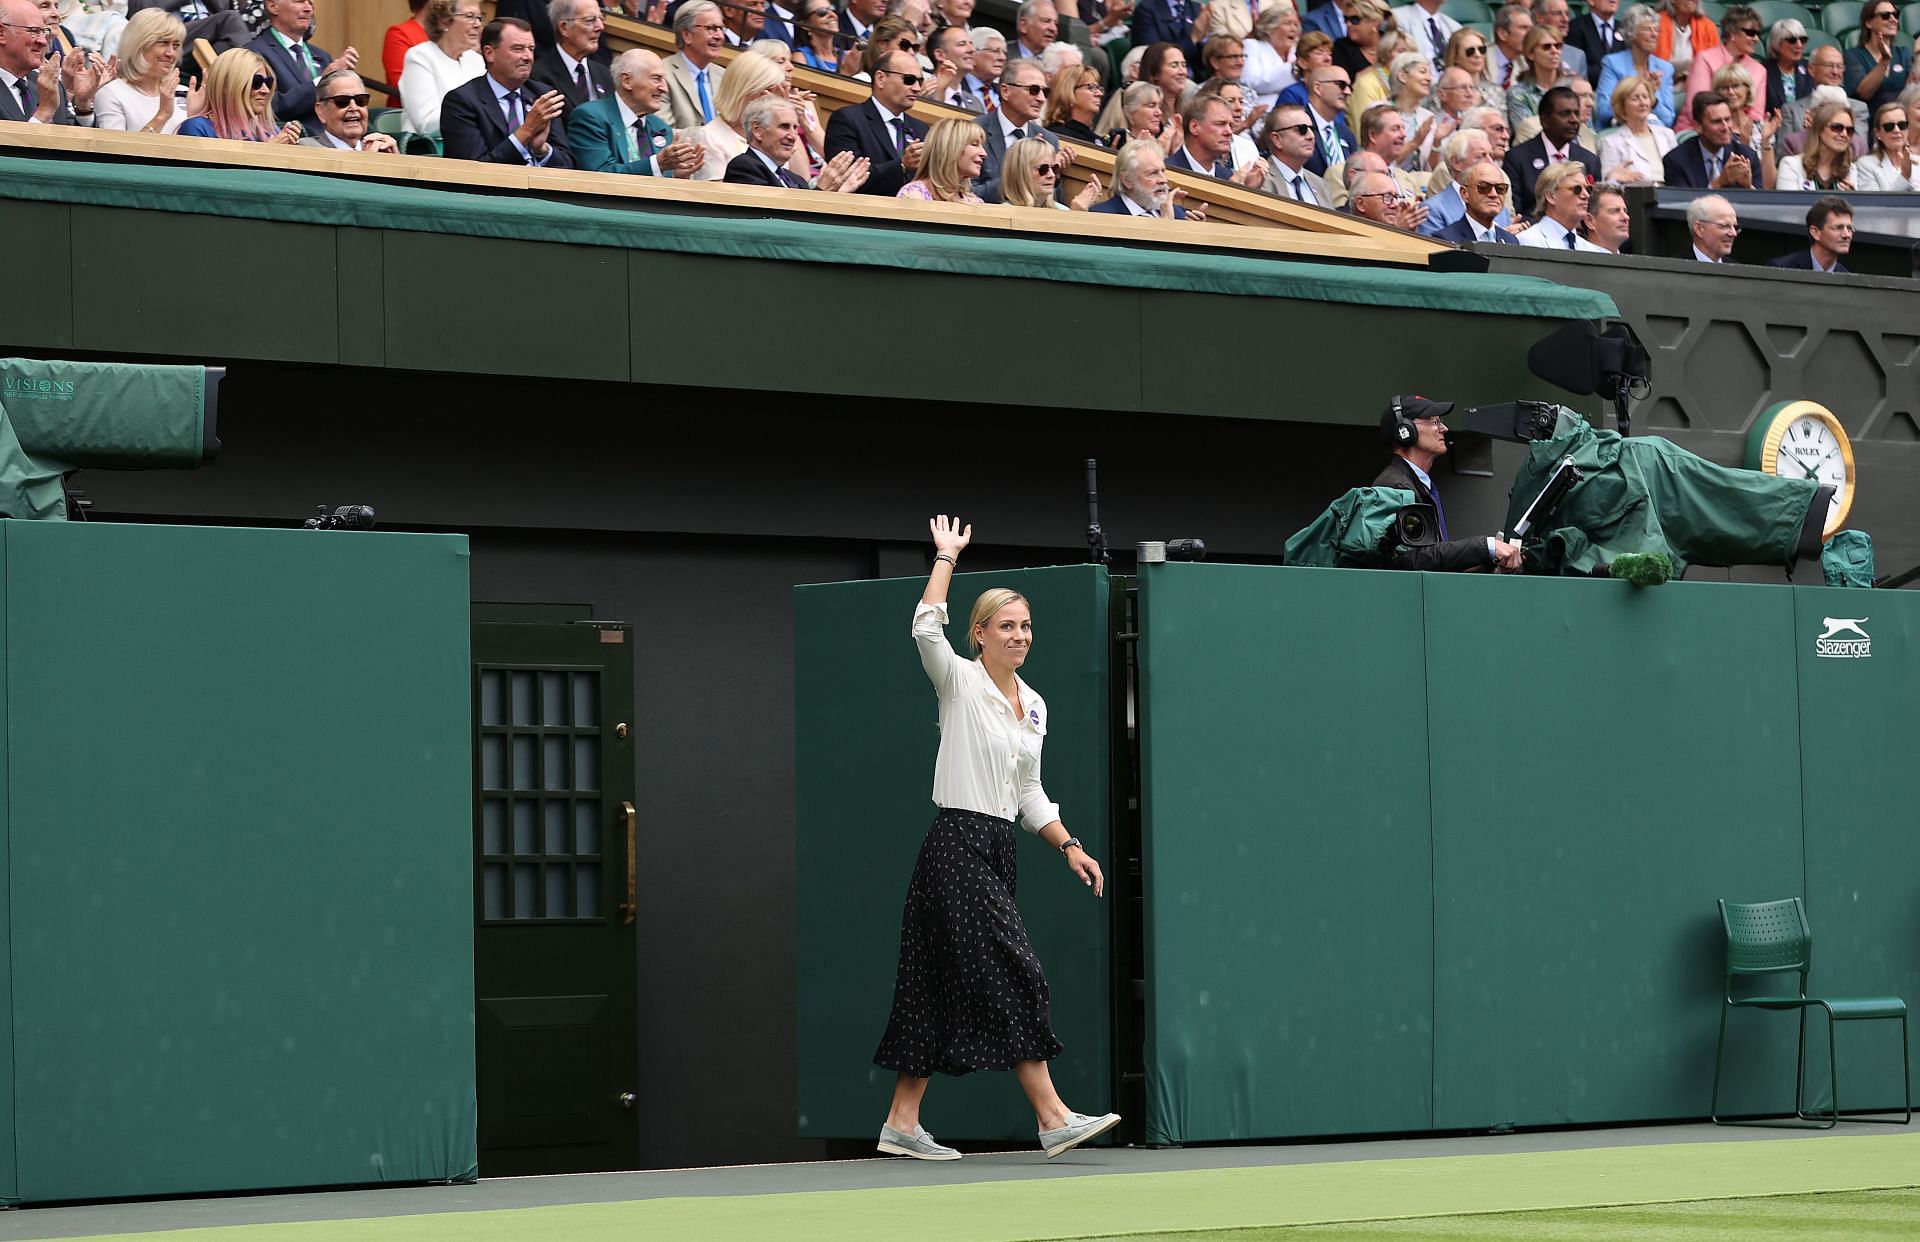 Angelique Kerber walks onto court during the Centre Court Centenary Celebration at Wimbledon